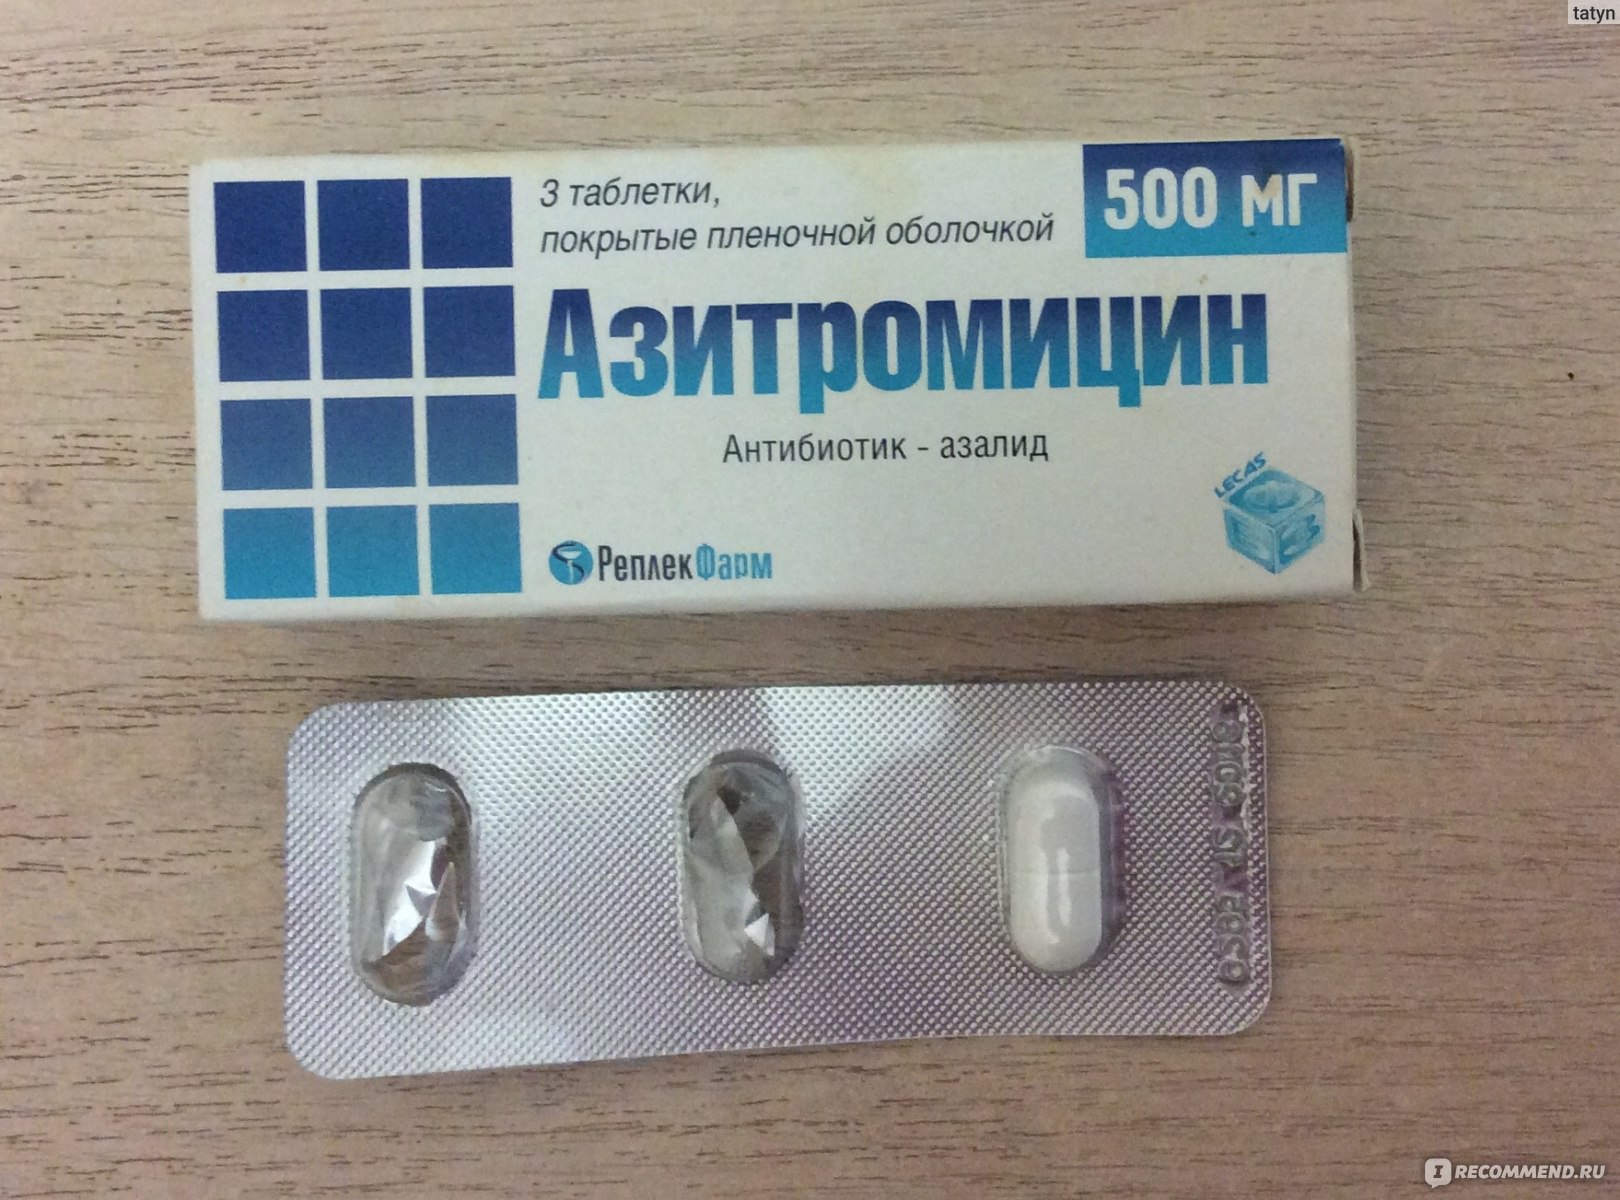 При простуде можно принимать антибиотики. Антибиотик Азитромицин 500 мг. Антибиотик 3 таблетки название Азитромицин. Антибиотик 3 таблетки в упаковке Азитромицин. Антибиотик от кашля 3 таблетки название.